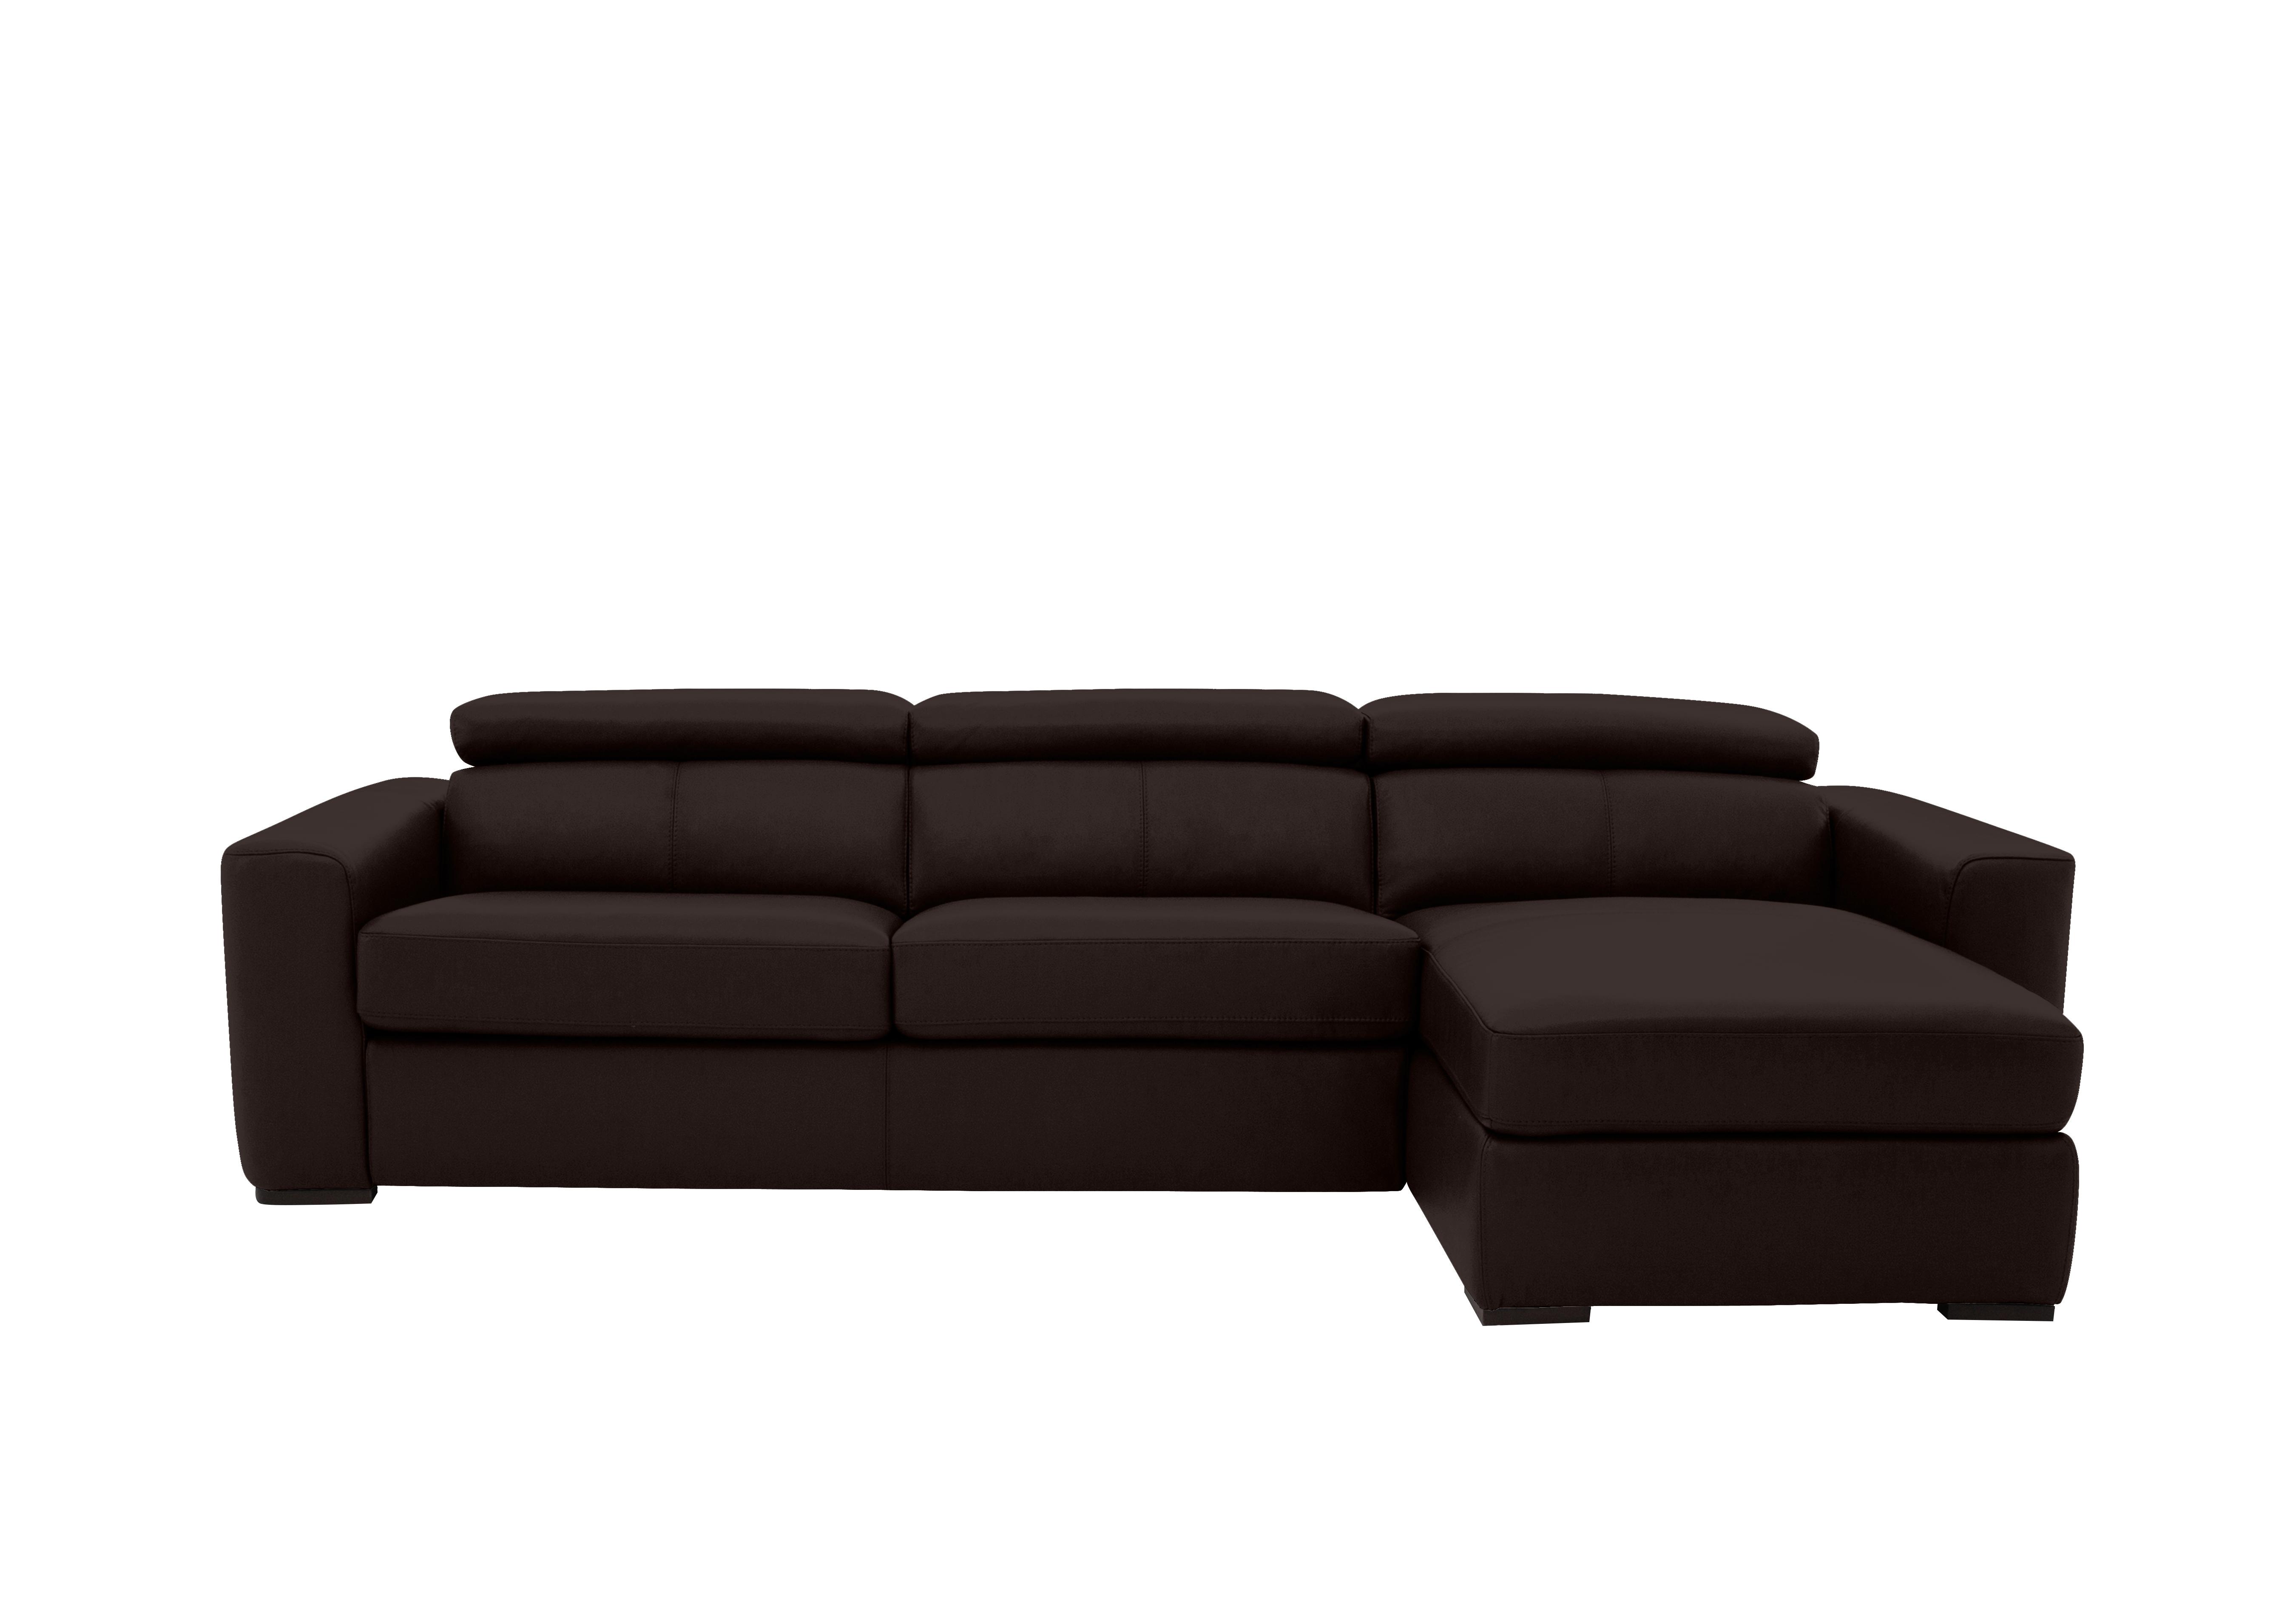 Infinity Leather Corner Chaise Sofa with Storage in Bv-1748 Dark Chocolate on Furniture Village